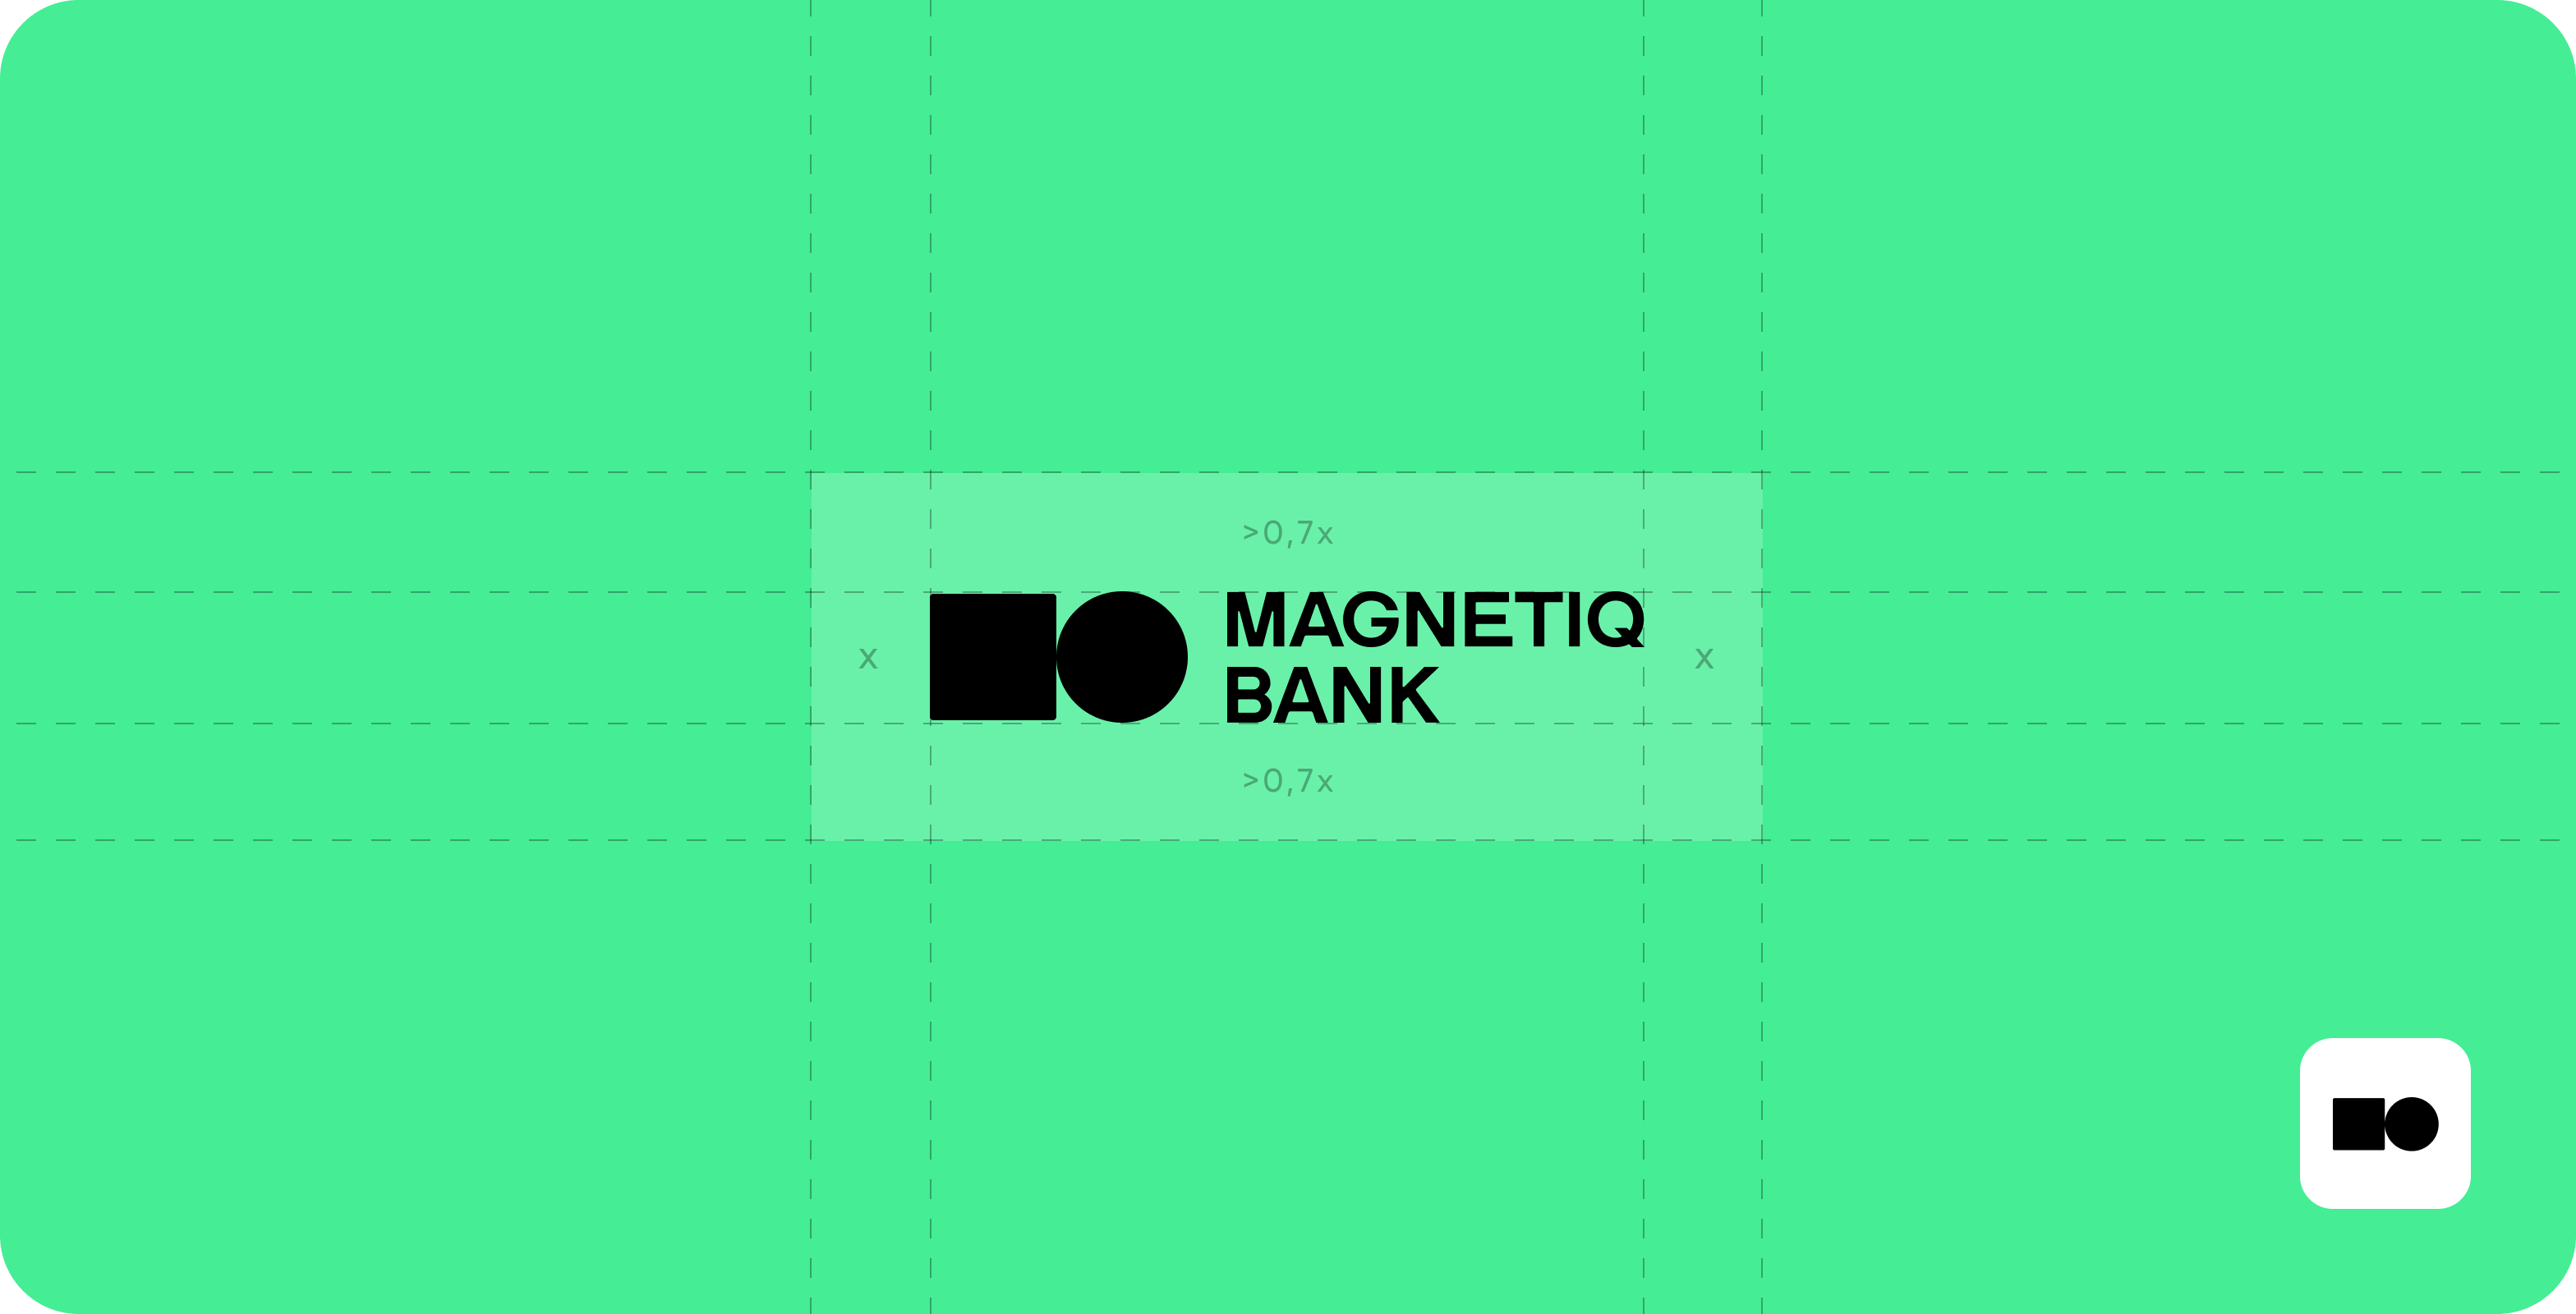 Goodface agency - Magnetiq Bank case - Magnetiq bank logo-1.png - Magnetiq bank rebranding: logo & brand identity, web development – Goodface - goodface.agency